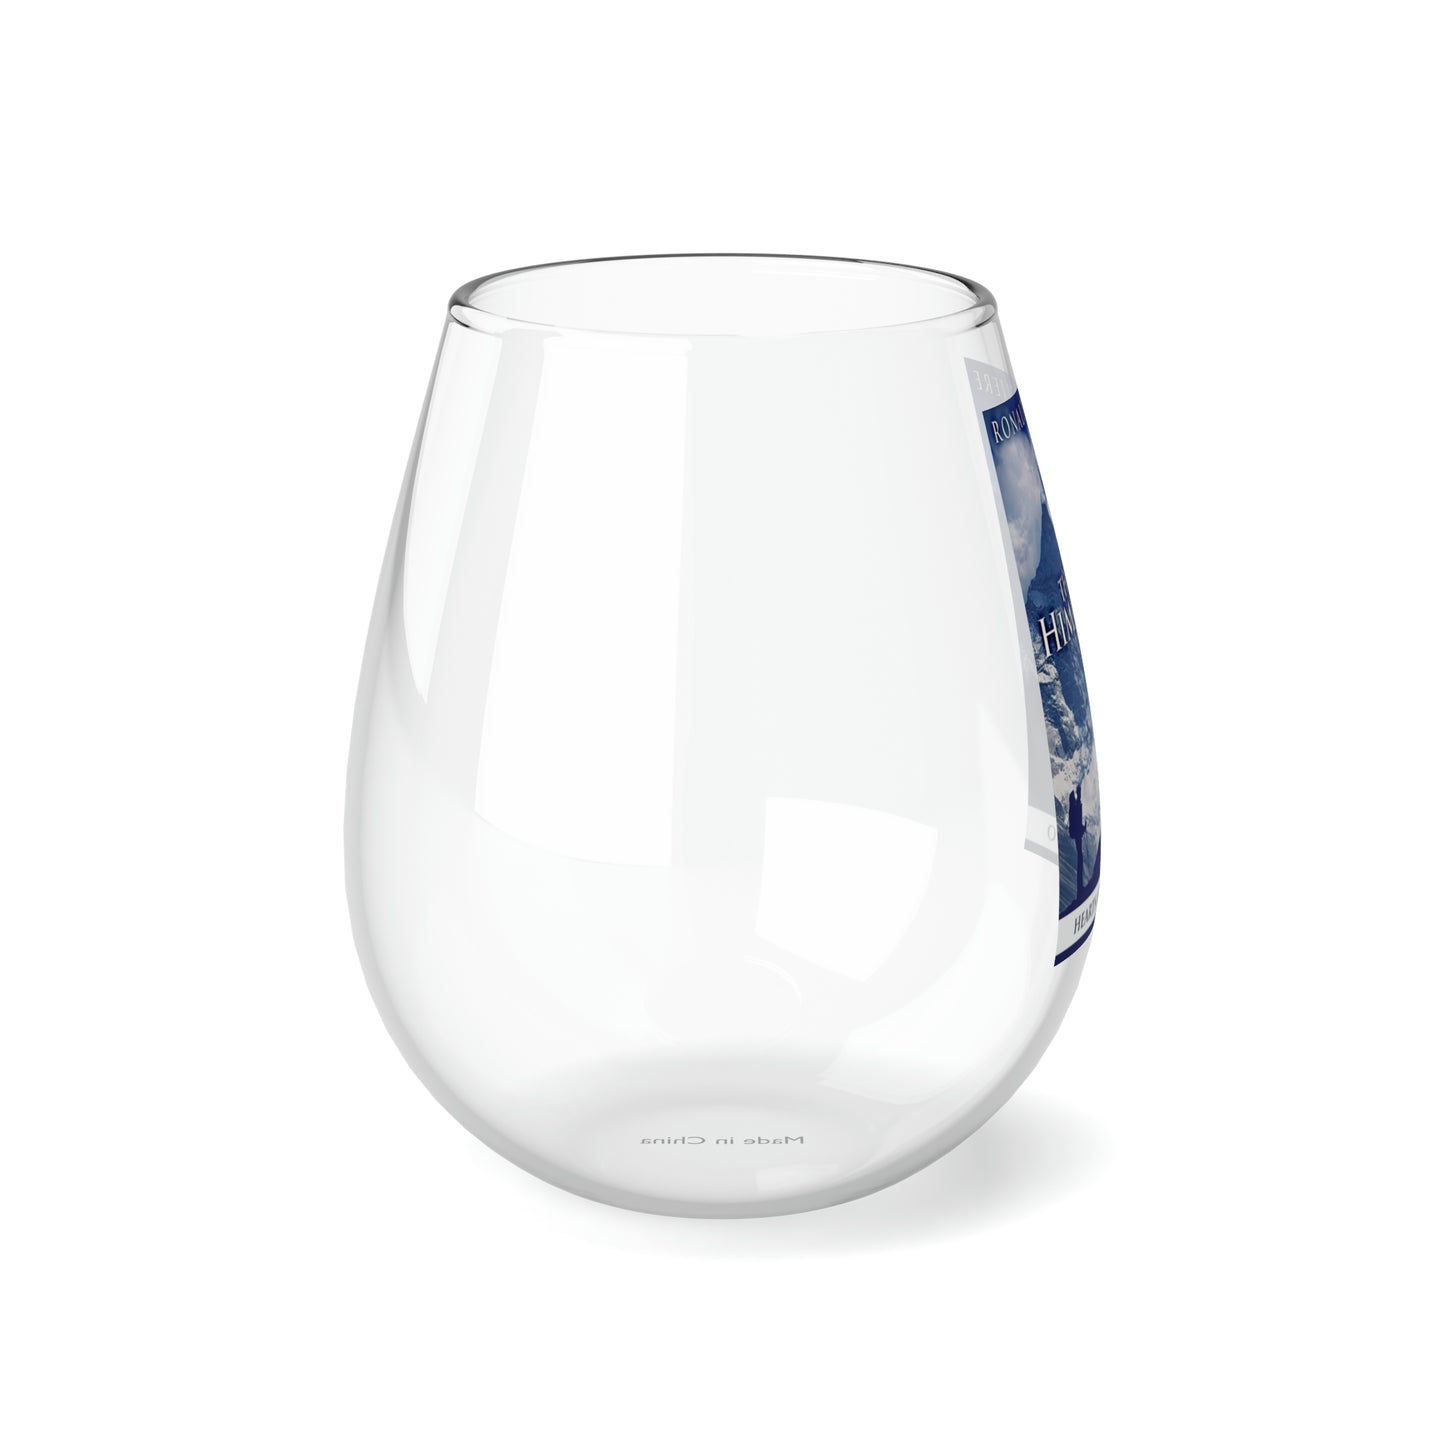 The Himalayan - Stemless Wine Glass, 11.75oz